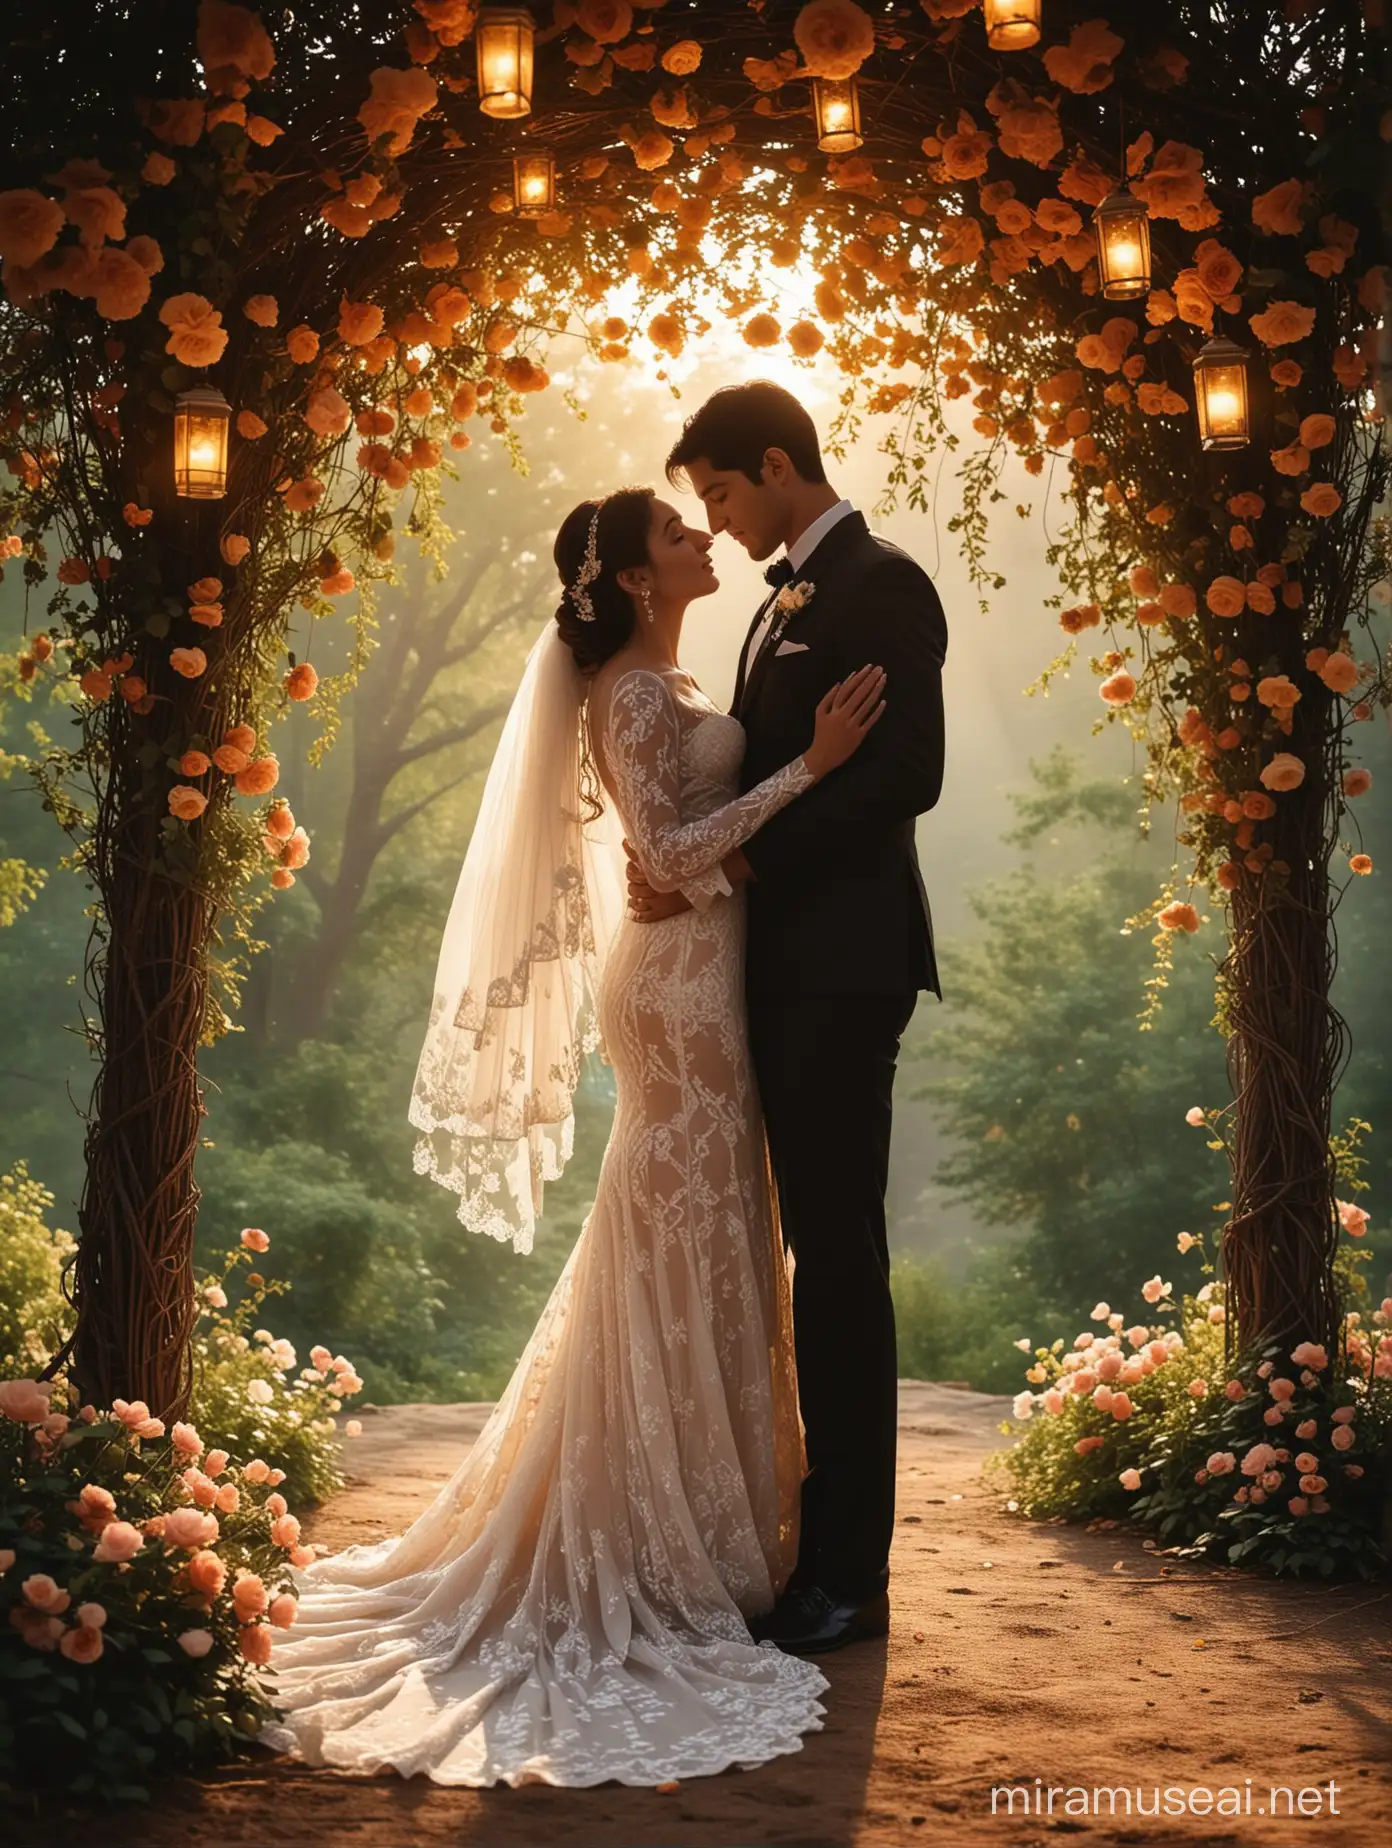 Romantic Sunset Wedding Silhouette in Tranquil Garden